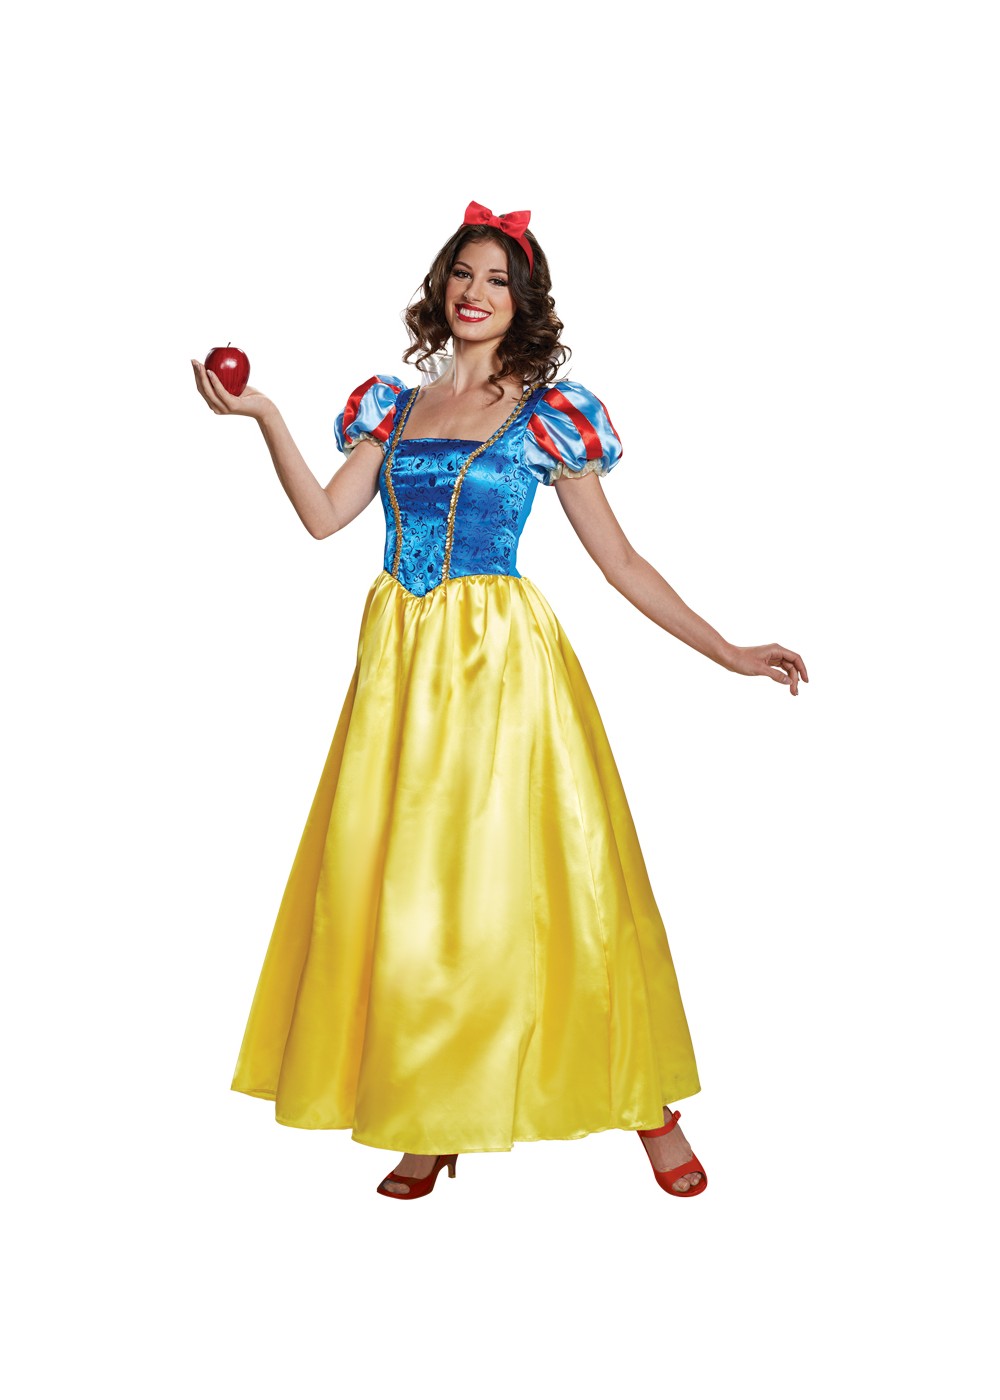 Snow White Womens Costume